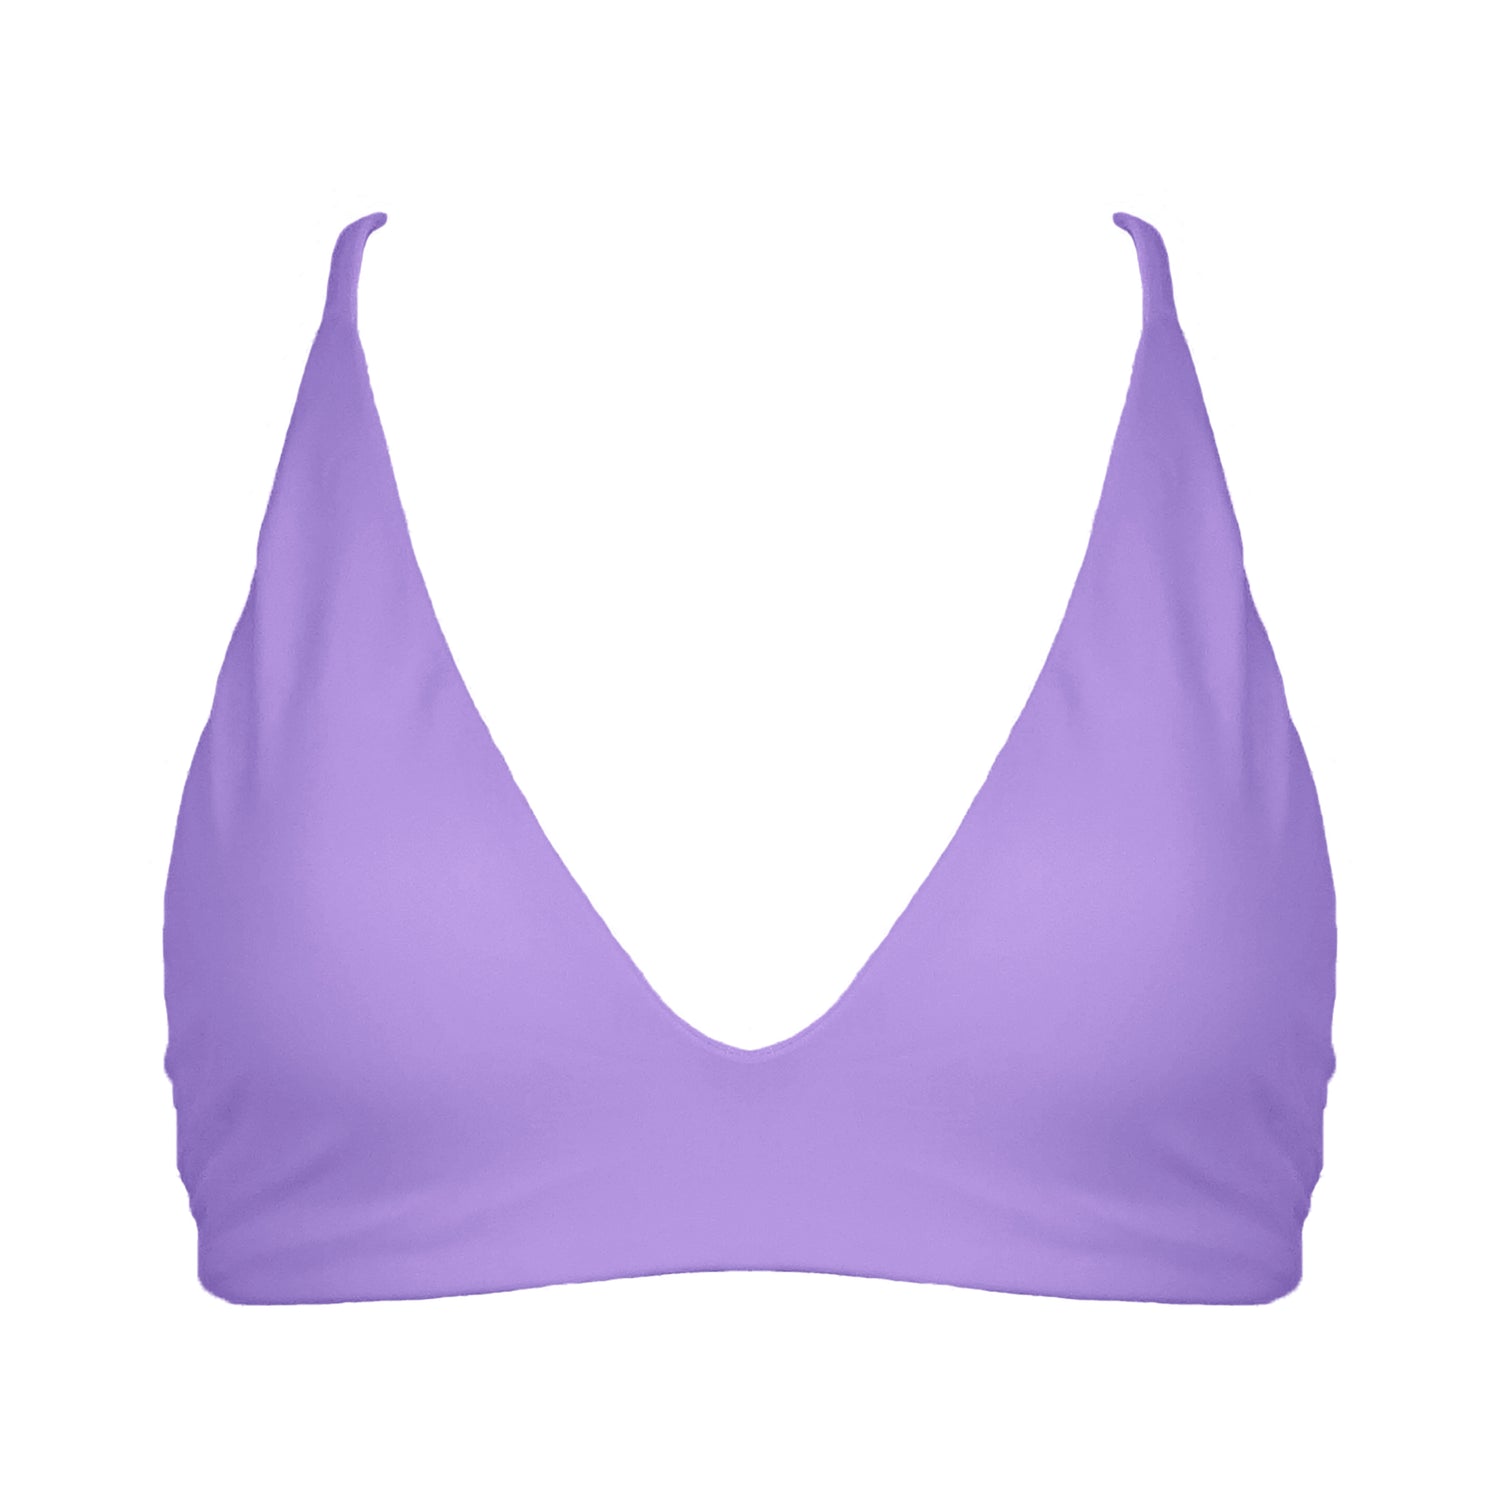 Pastel purple Bralette style, triangle bikini top with plunging v-neckline, adjustable tie back strap and adjustable shoulder straps. 